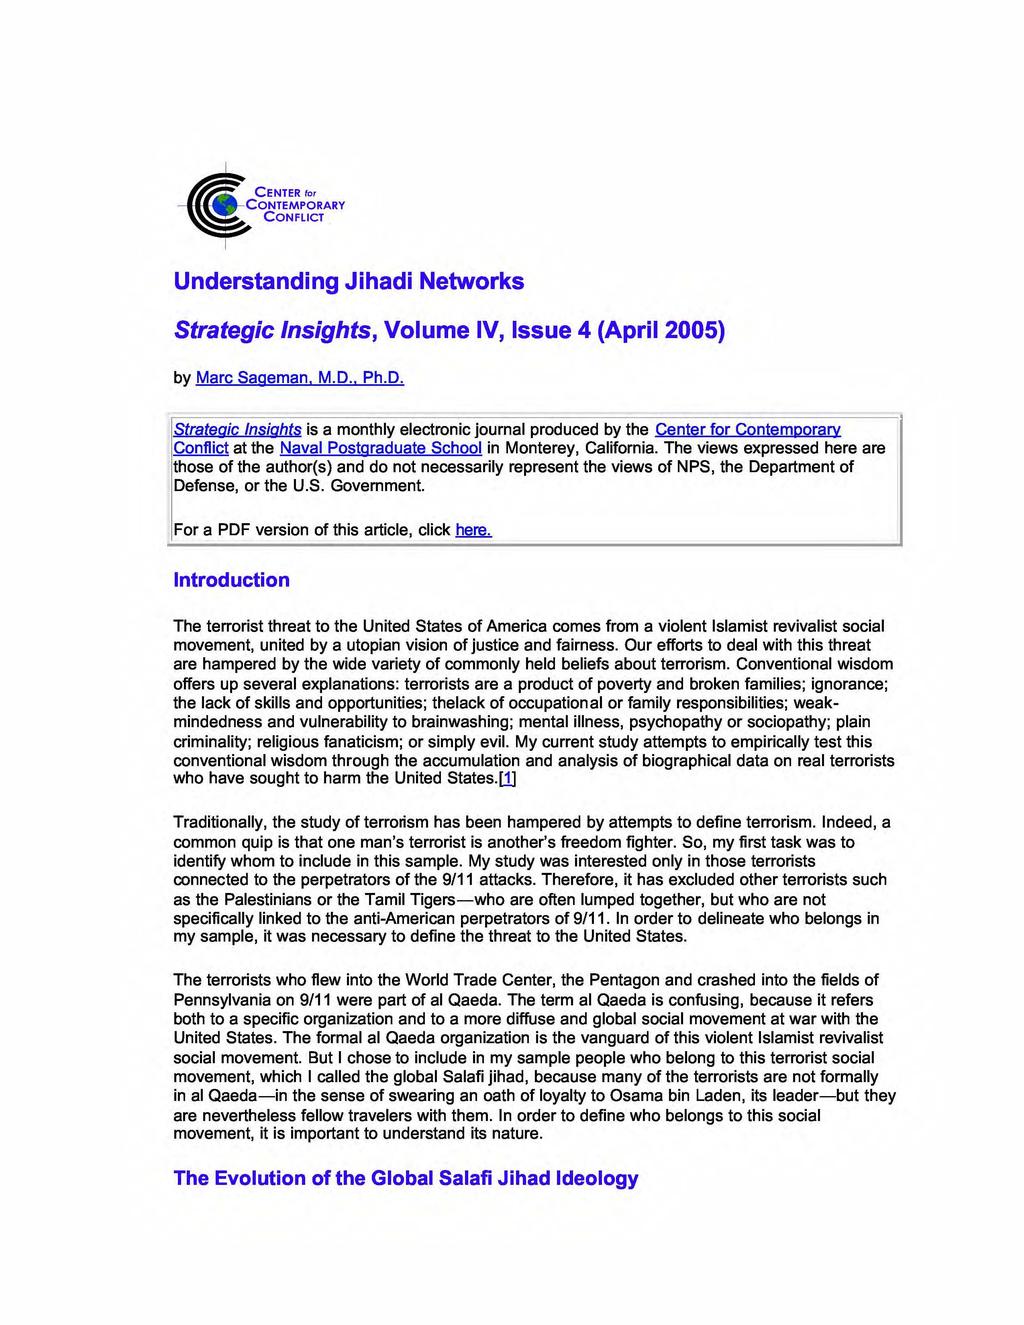 CENTERfo' for CONTEMPORARY CONFLICT Understanding Jihadi Networks Strategic Insights, Volume IV, Issue 4 (April 2005) by Marc Sageman. Sageman, M.D"